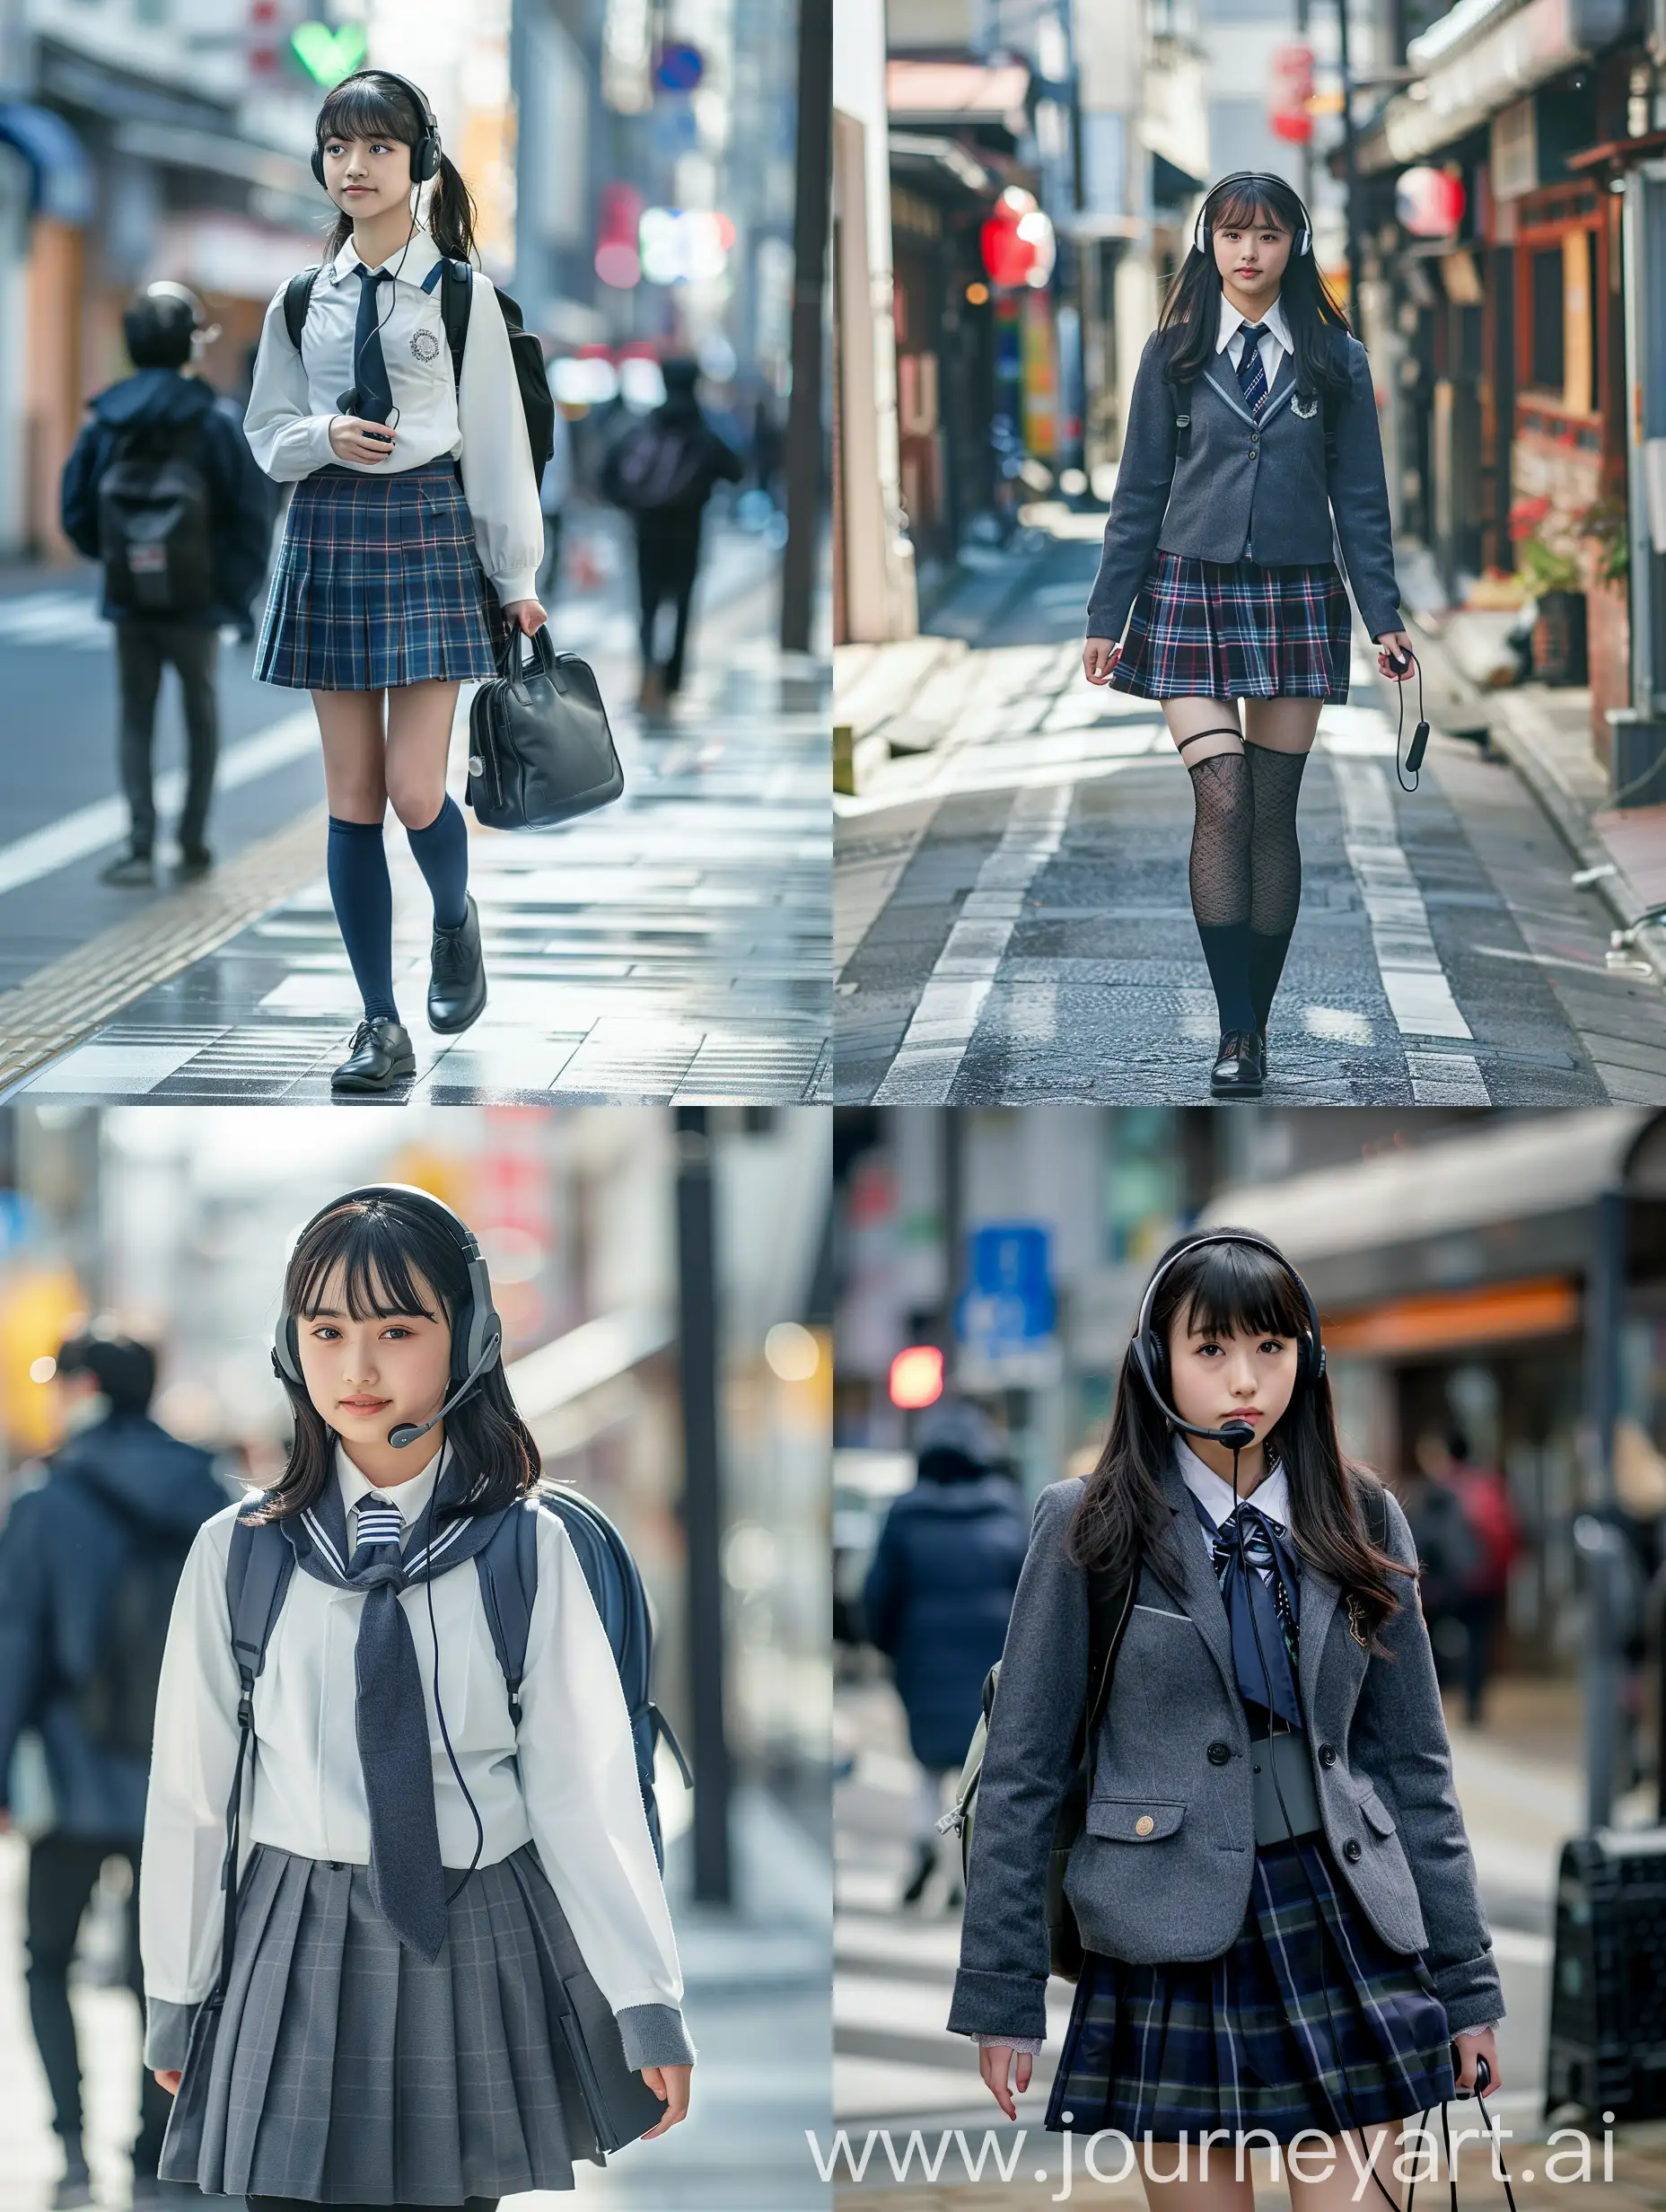 Japanese-Schoolgirl-Walking-in-Tokyo-City-with-Headset